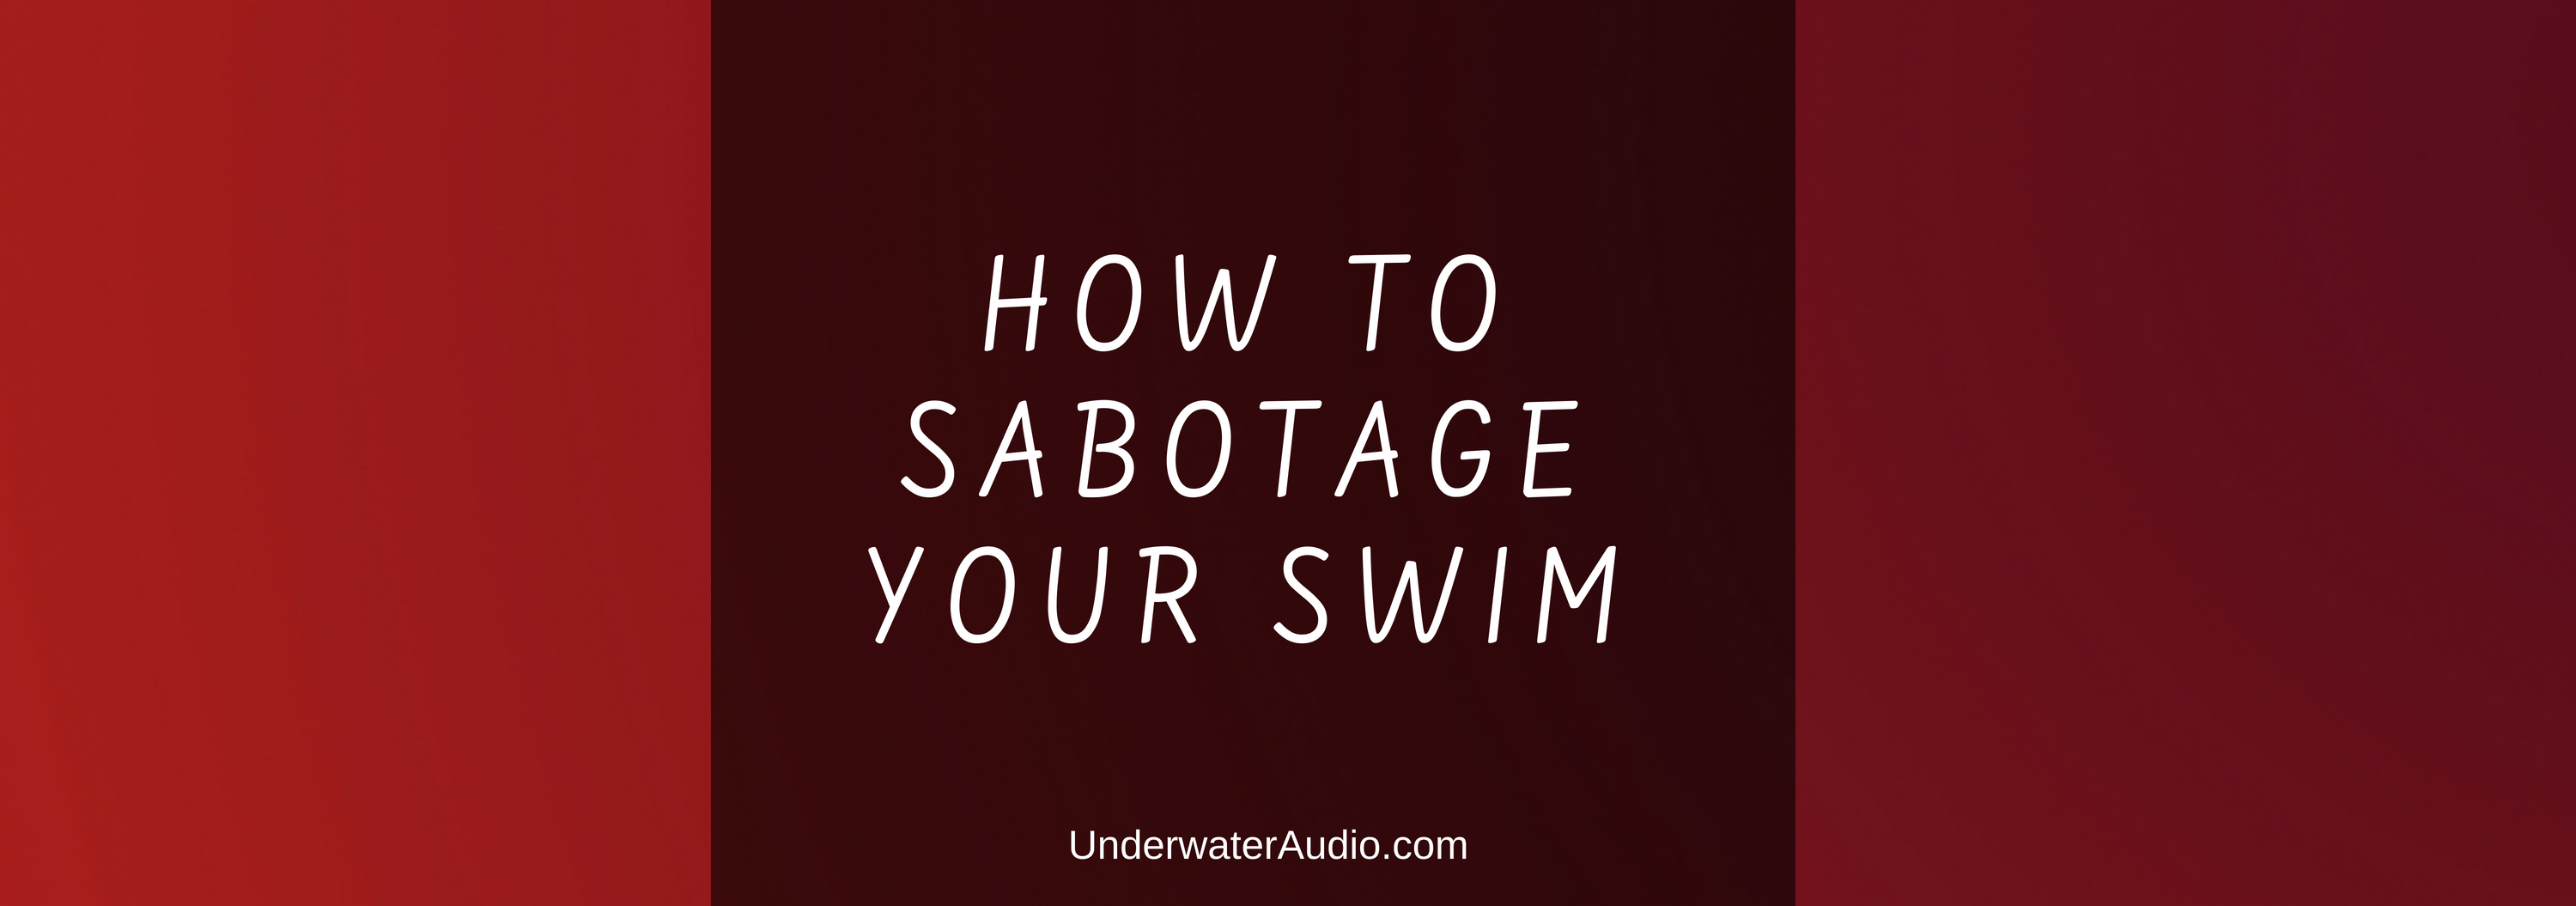 How to Sabotage Your Swim